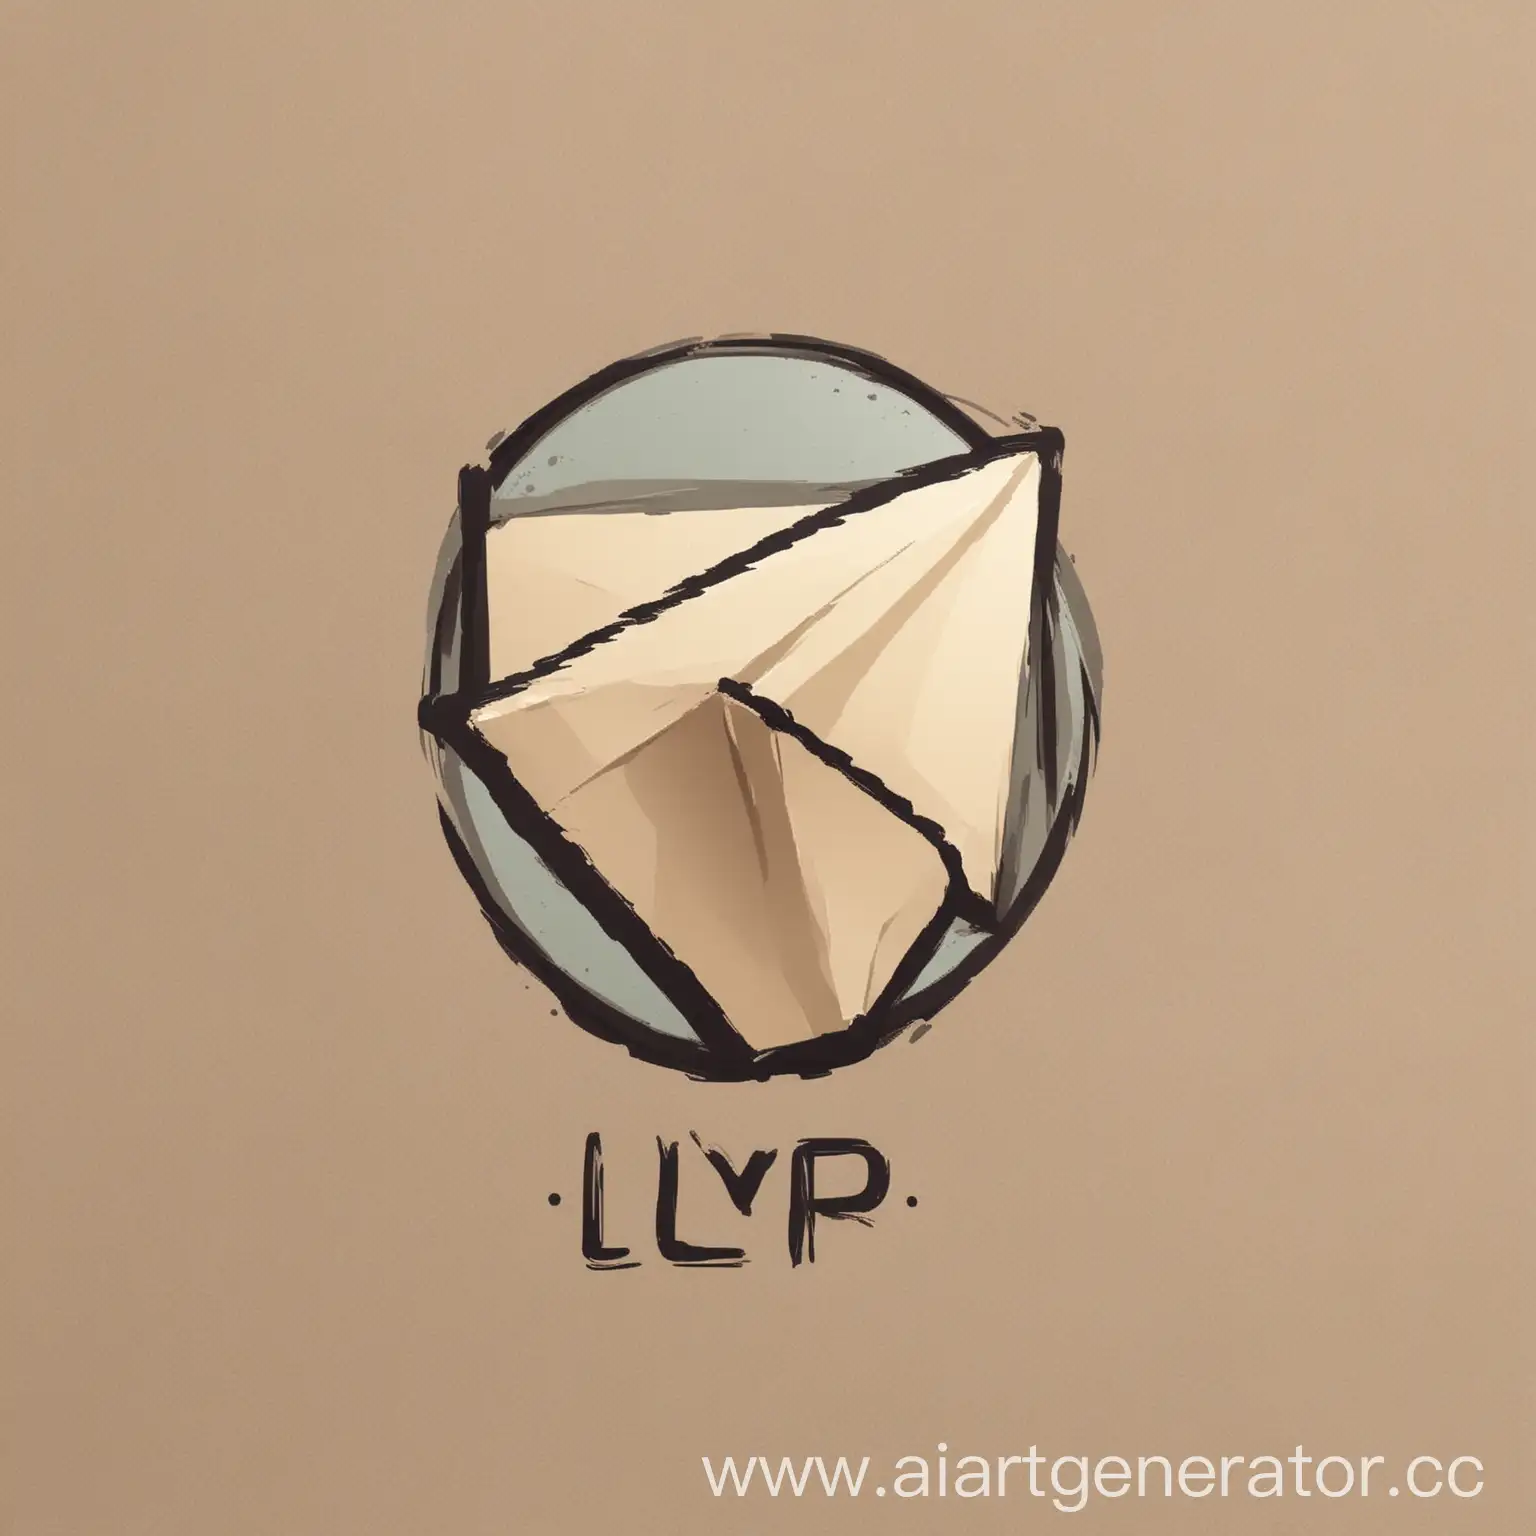 Customized-Telegram-Logo-Design-with-lyp-Name